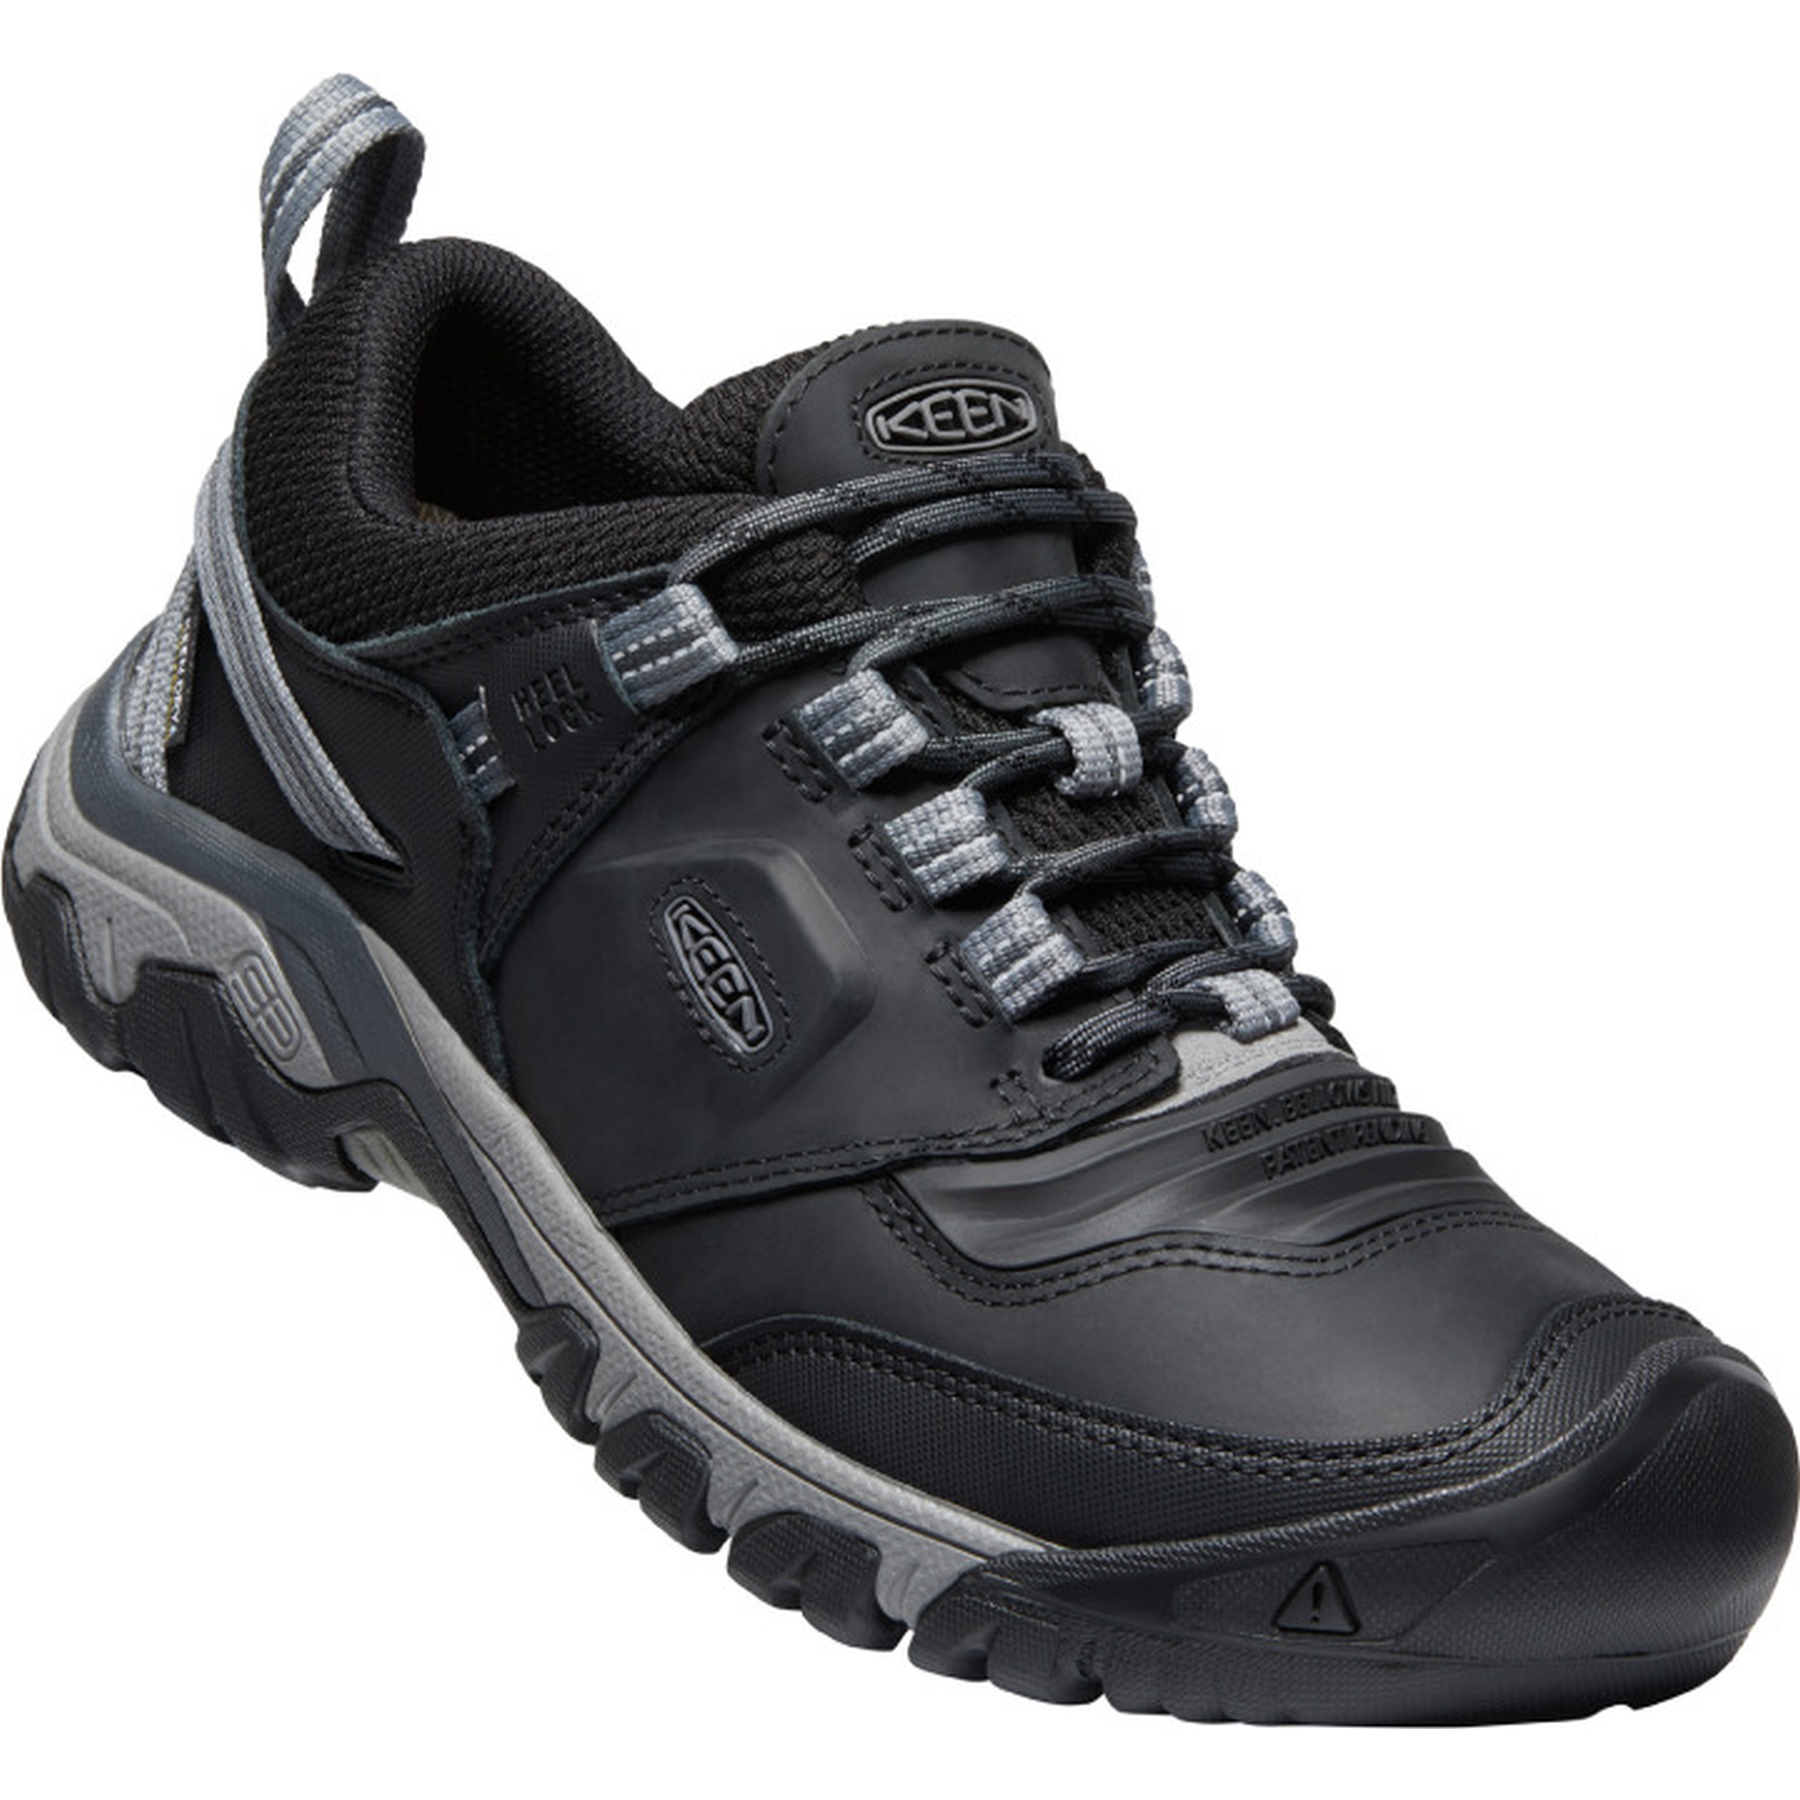 Picture of KEEN Ridge Flex Waterproof Hiking Shoes Men - Black / Magnet